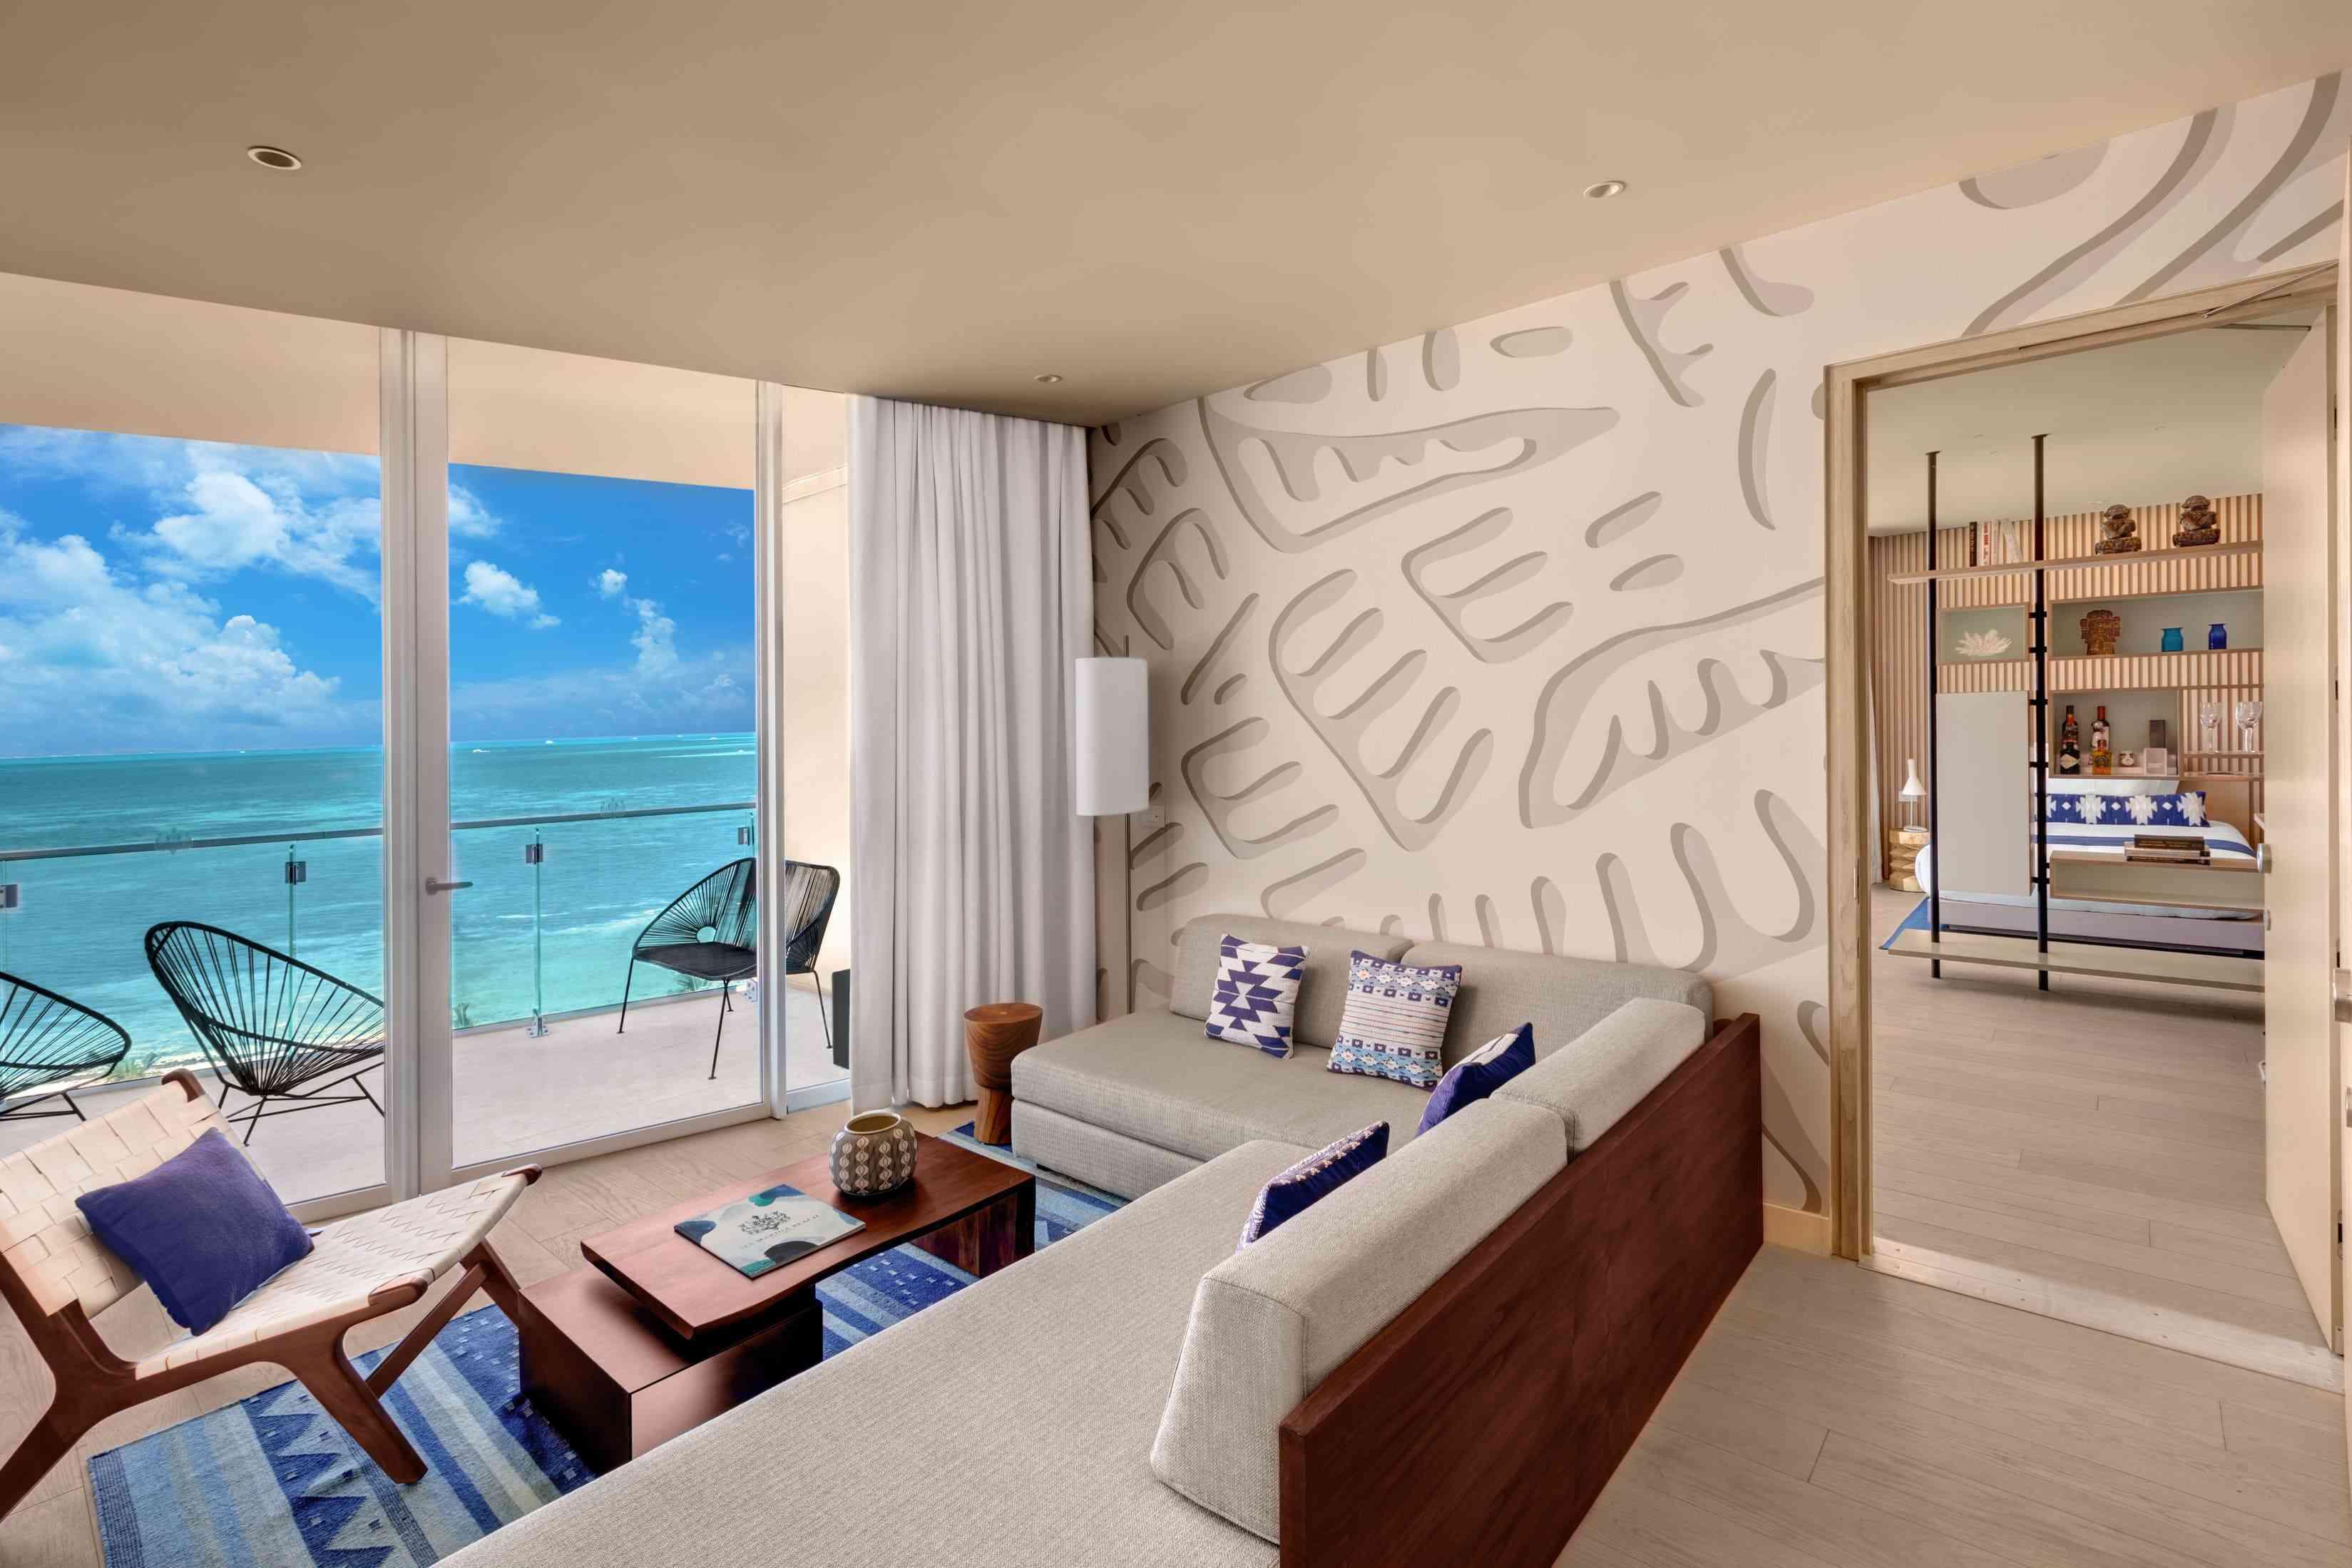 View of living room with an open door leading to the deluxe ocean front one bedroom king suite